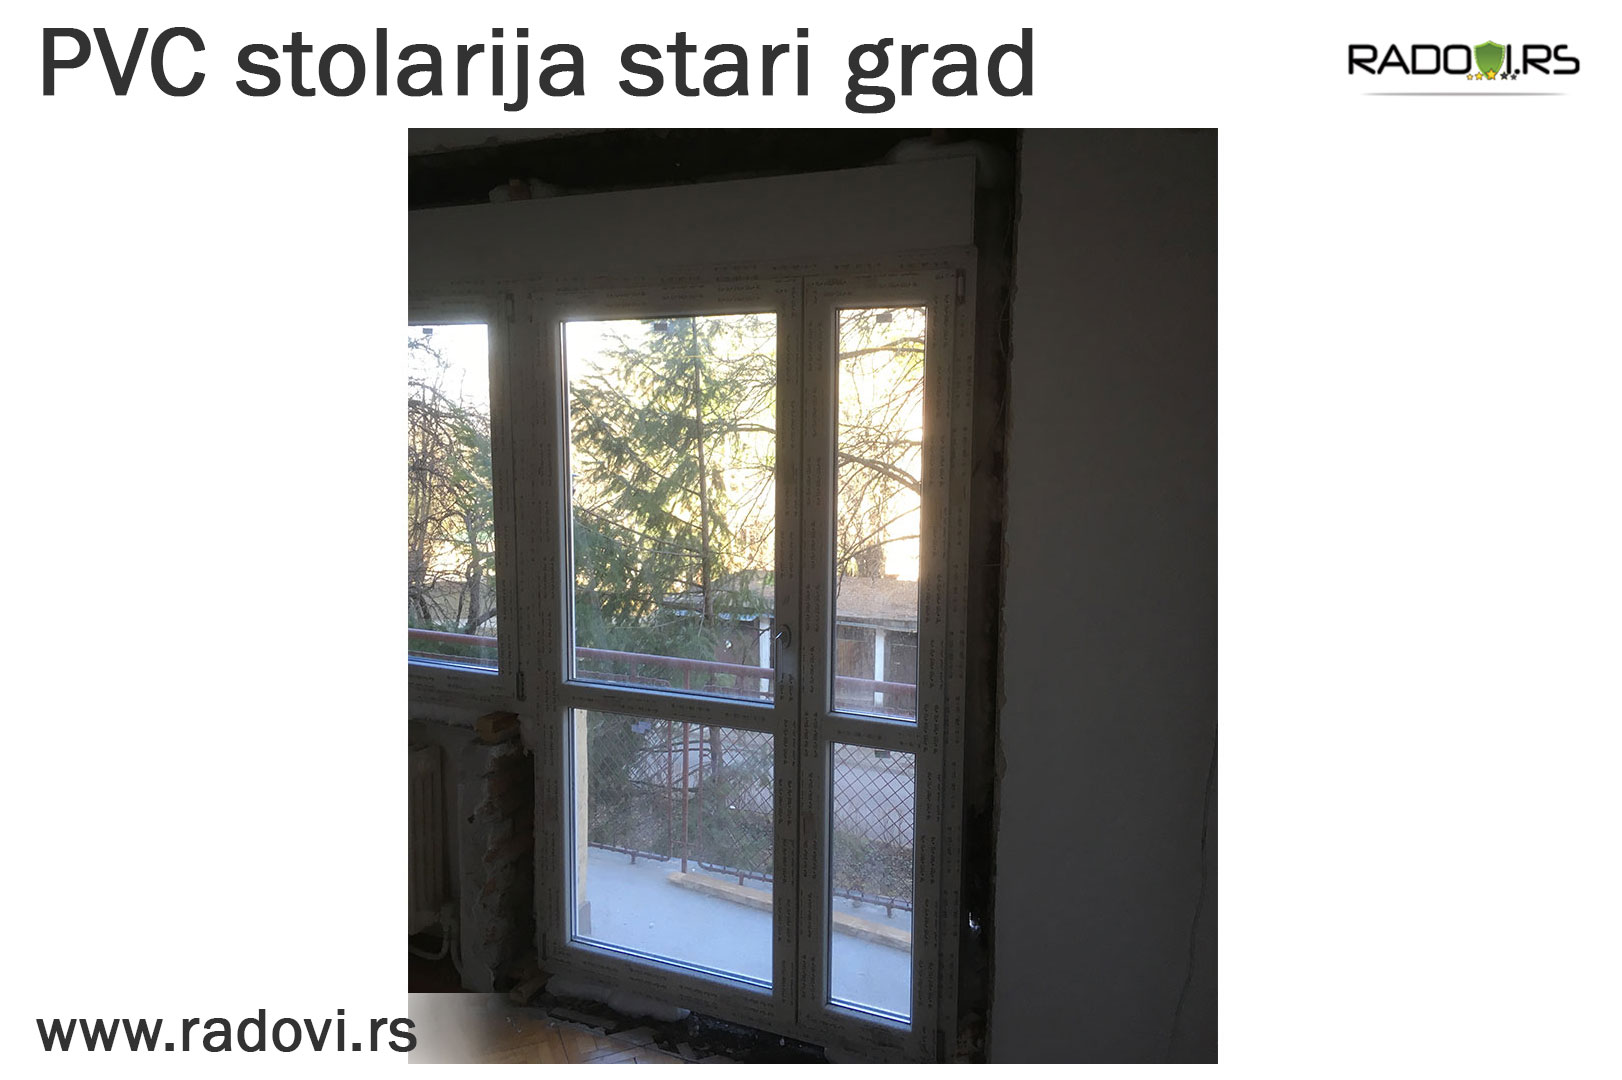 PVC stolarija stari grad - PVC Stolarija Tim - Radovi.rs